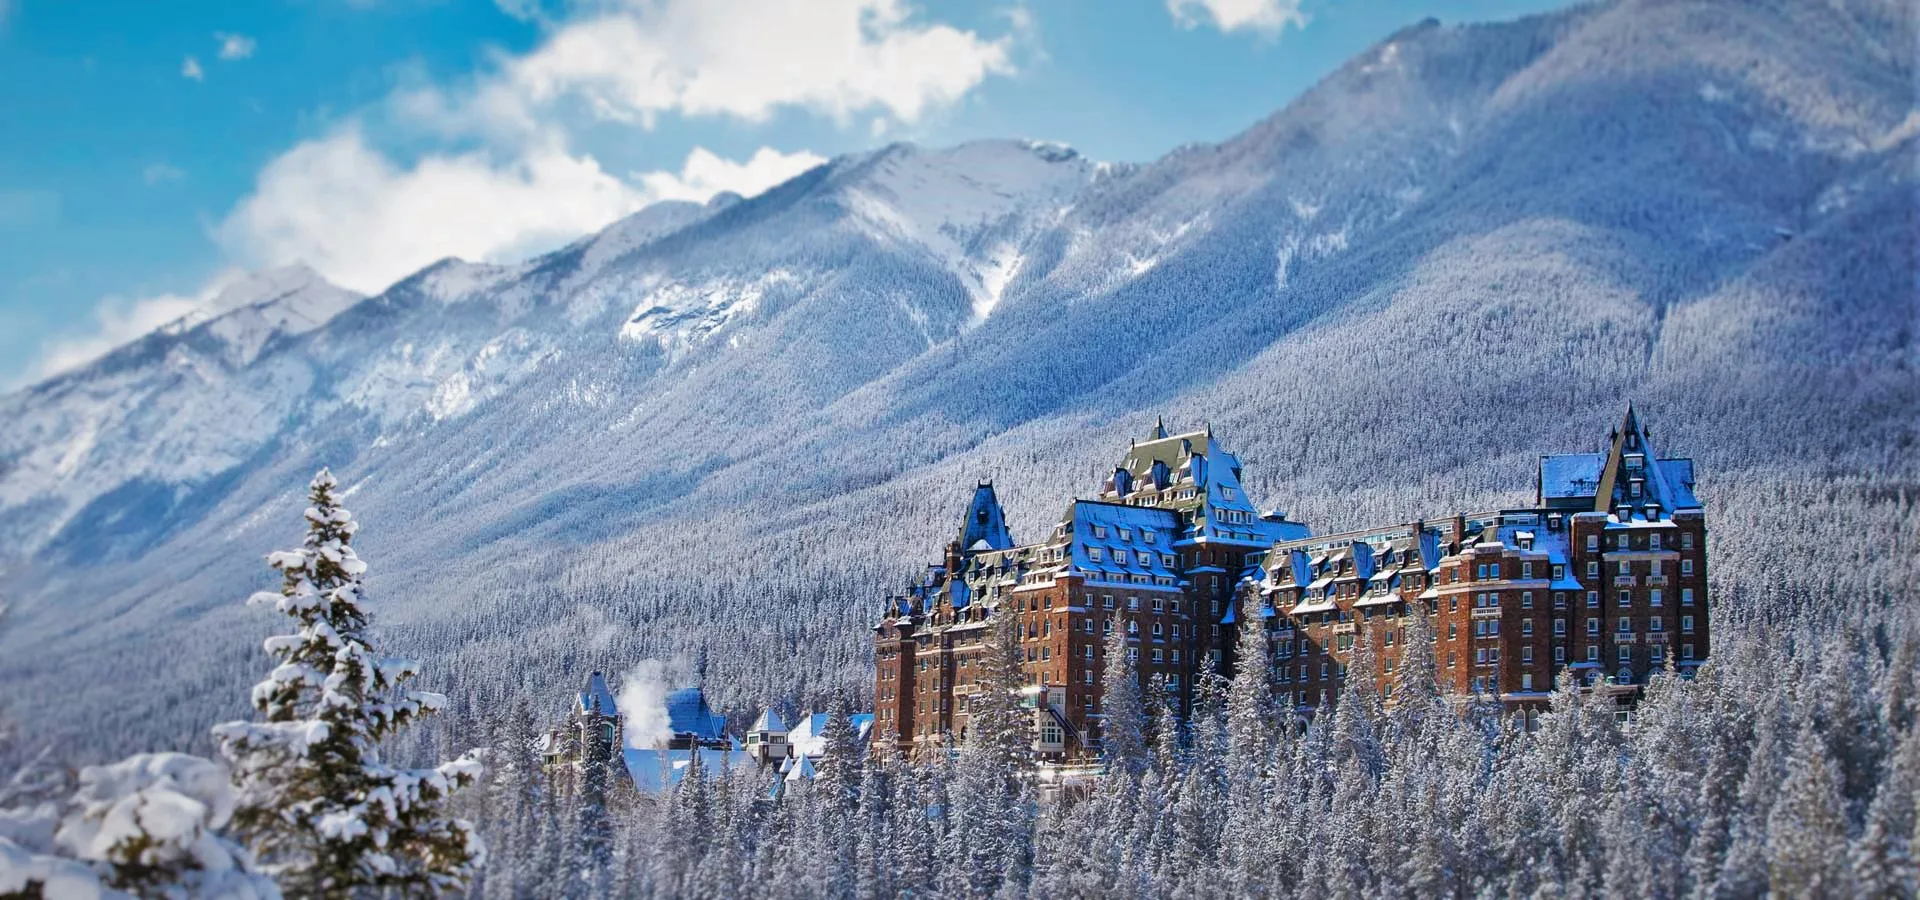 Best Canadian Cities To Treasure The Beautiful Winter Season - 2TravelDads